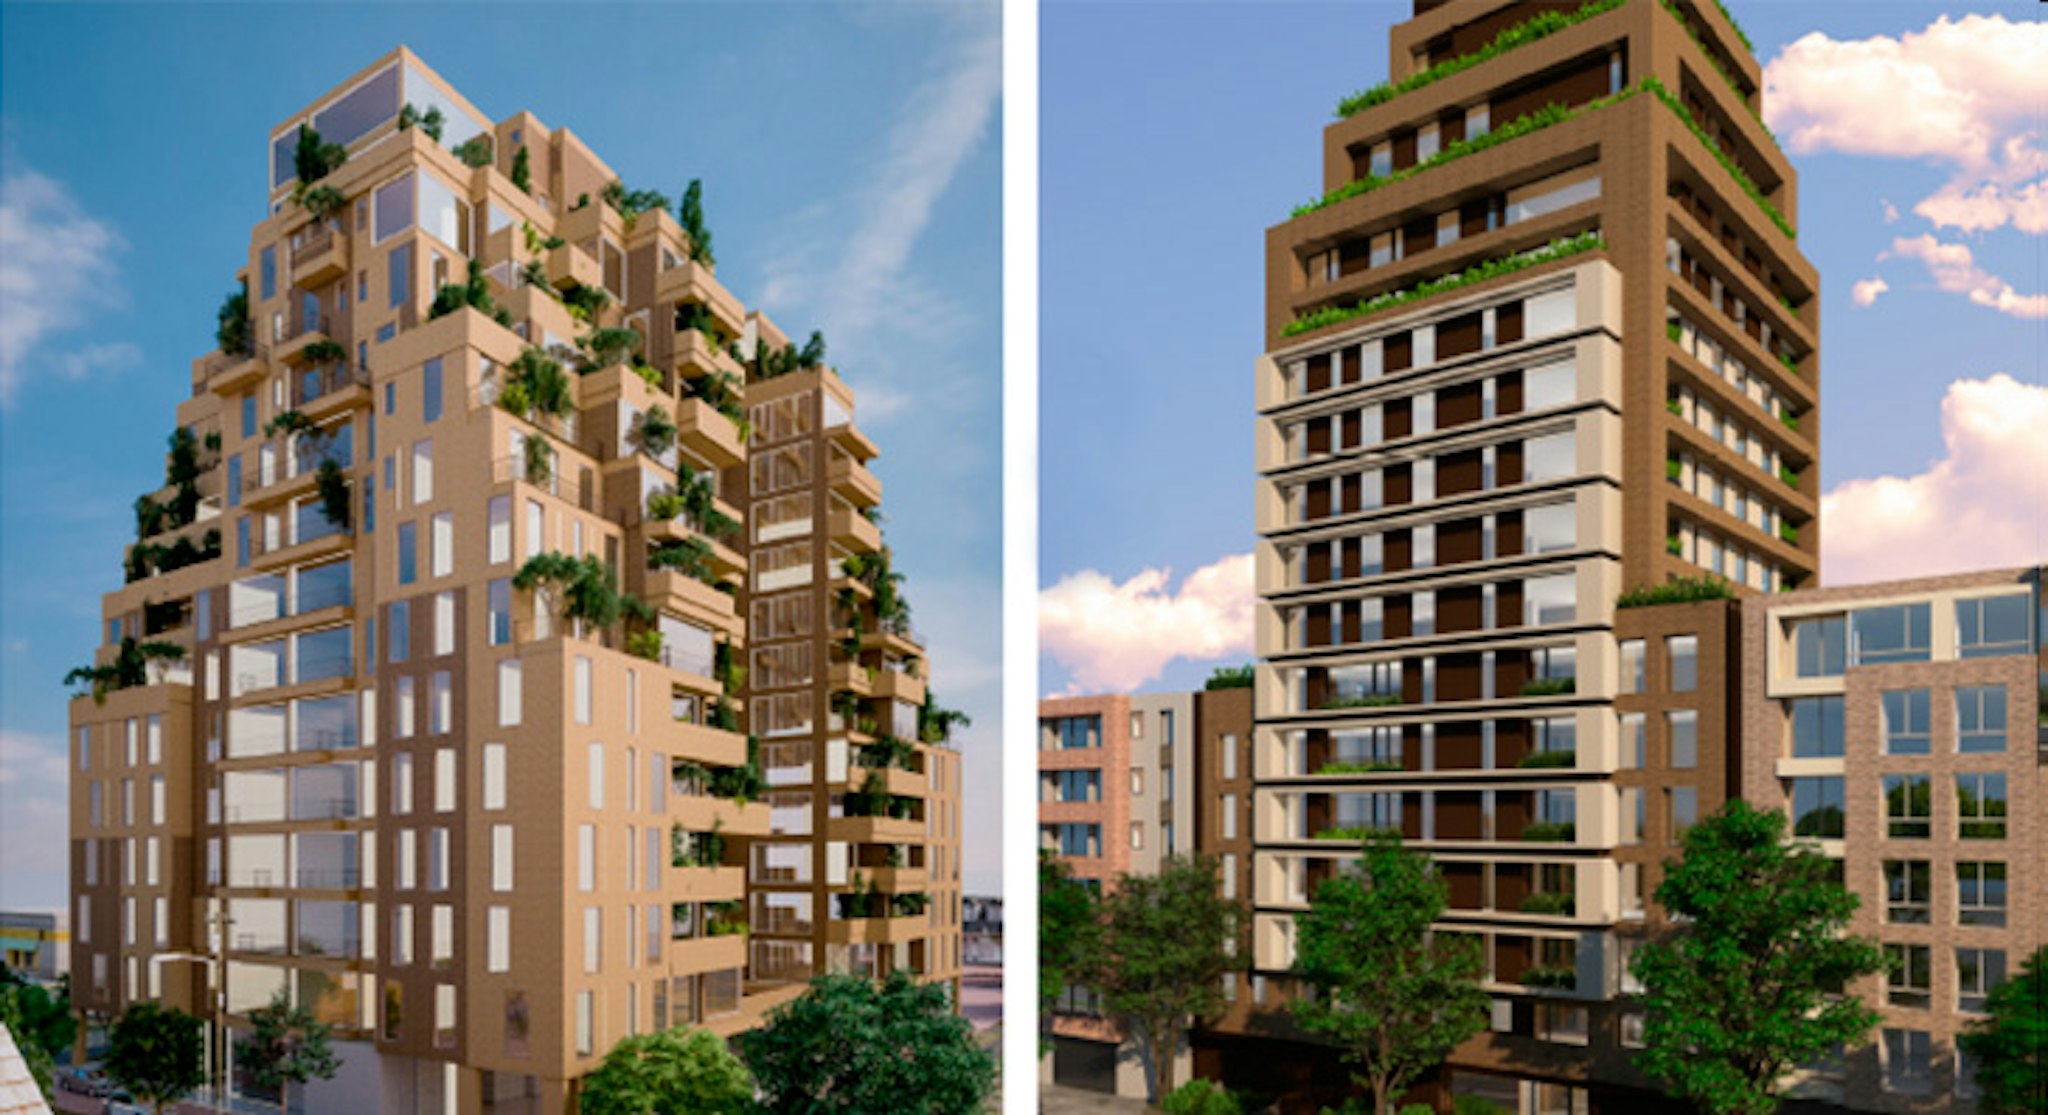 Image Apartamentos sobre planos en Bogotá